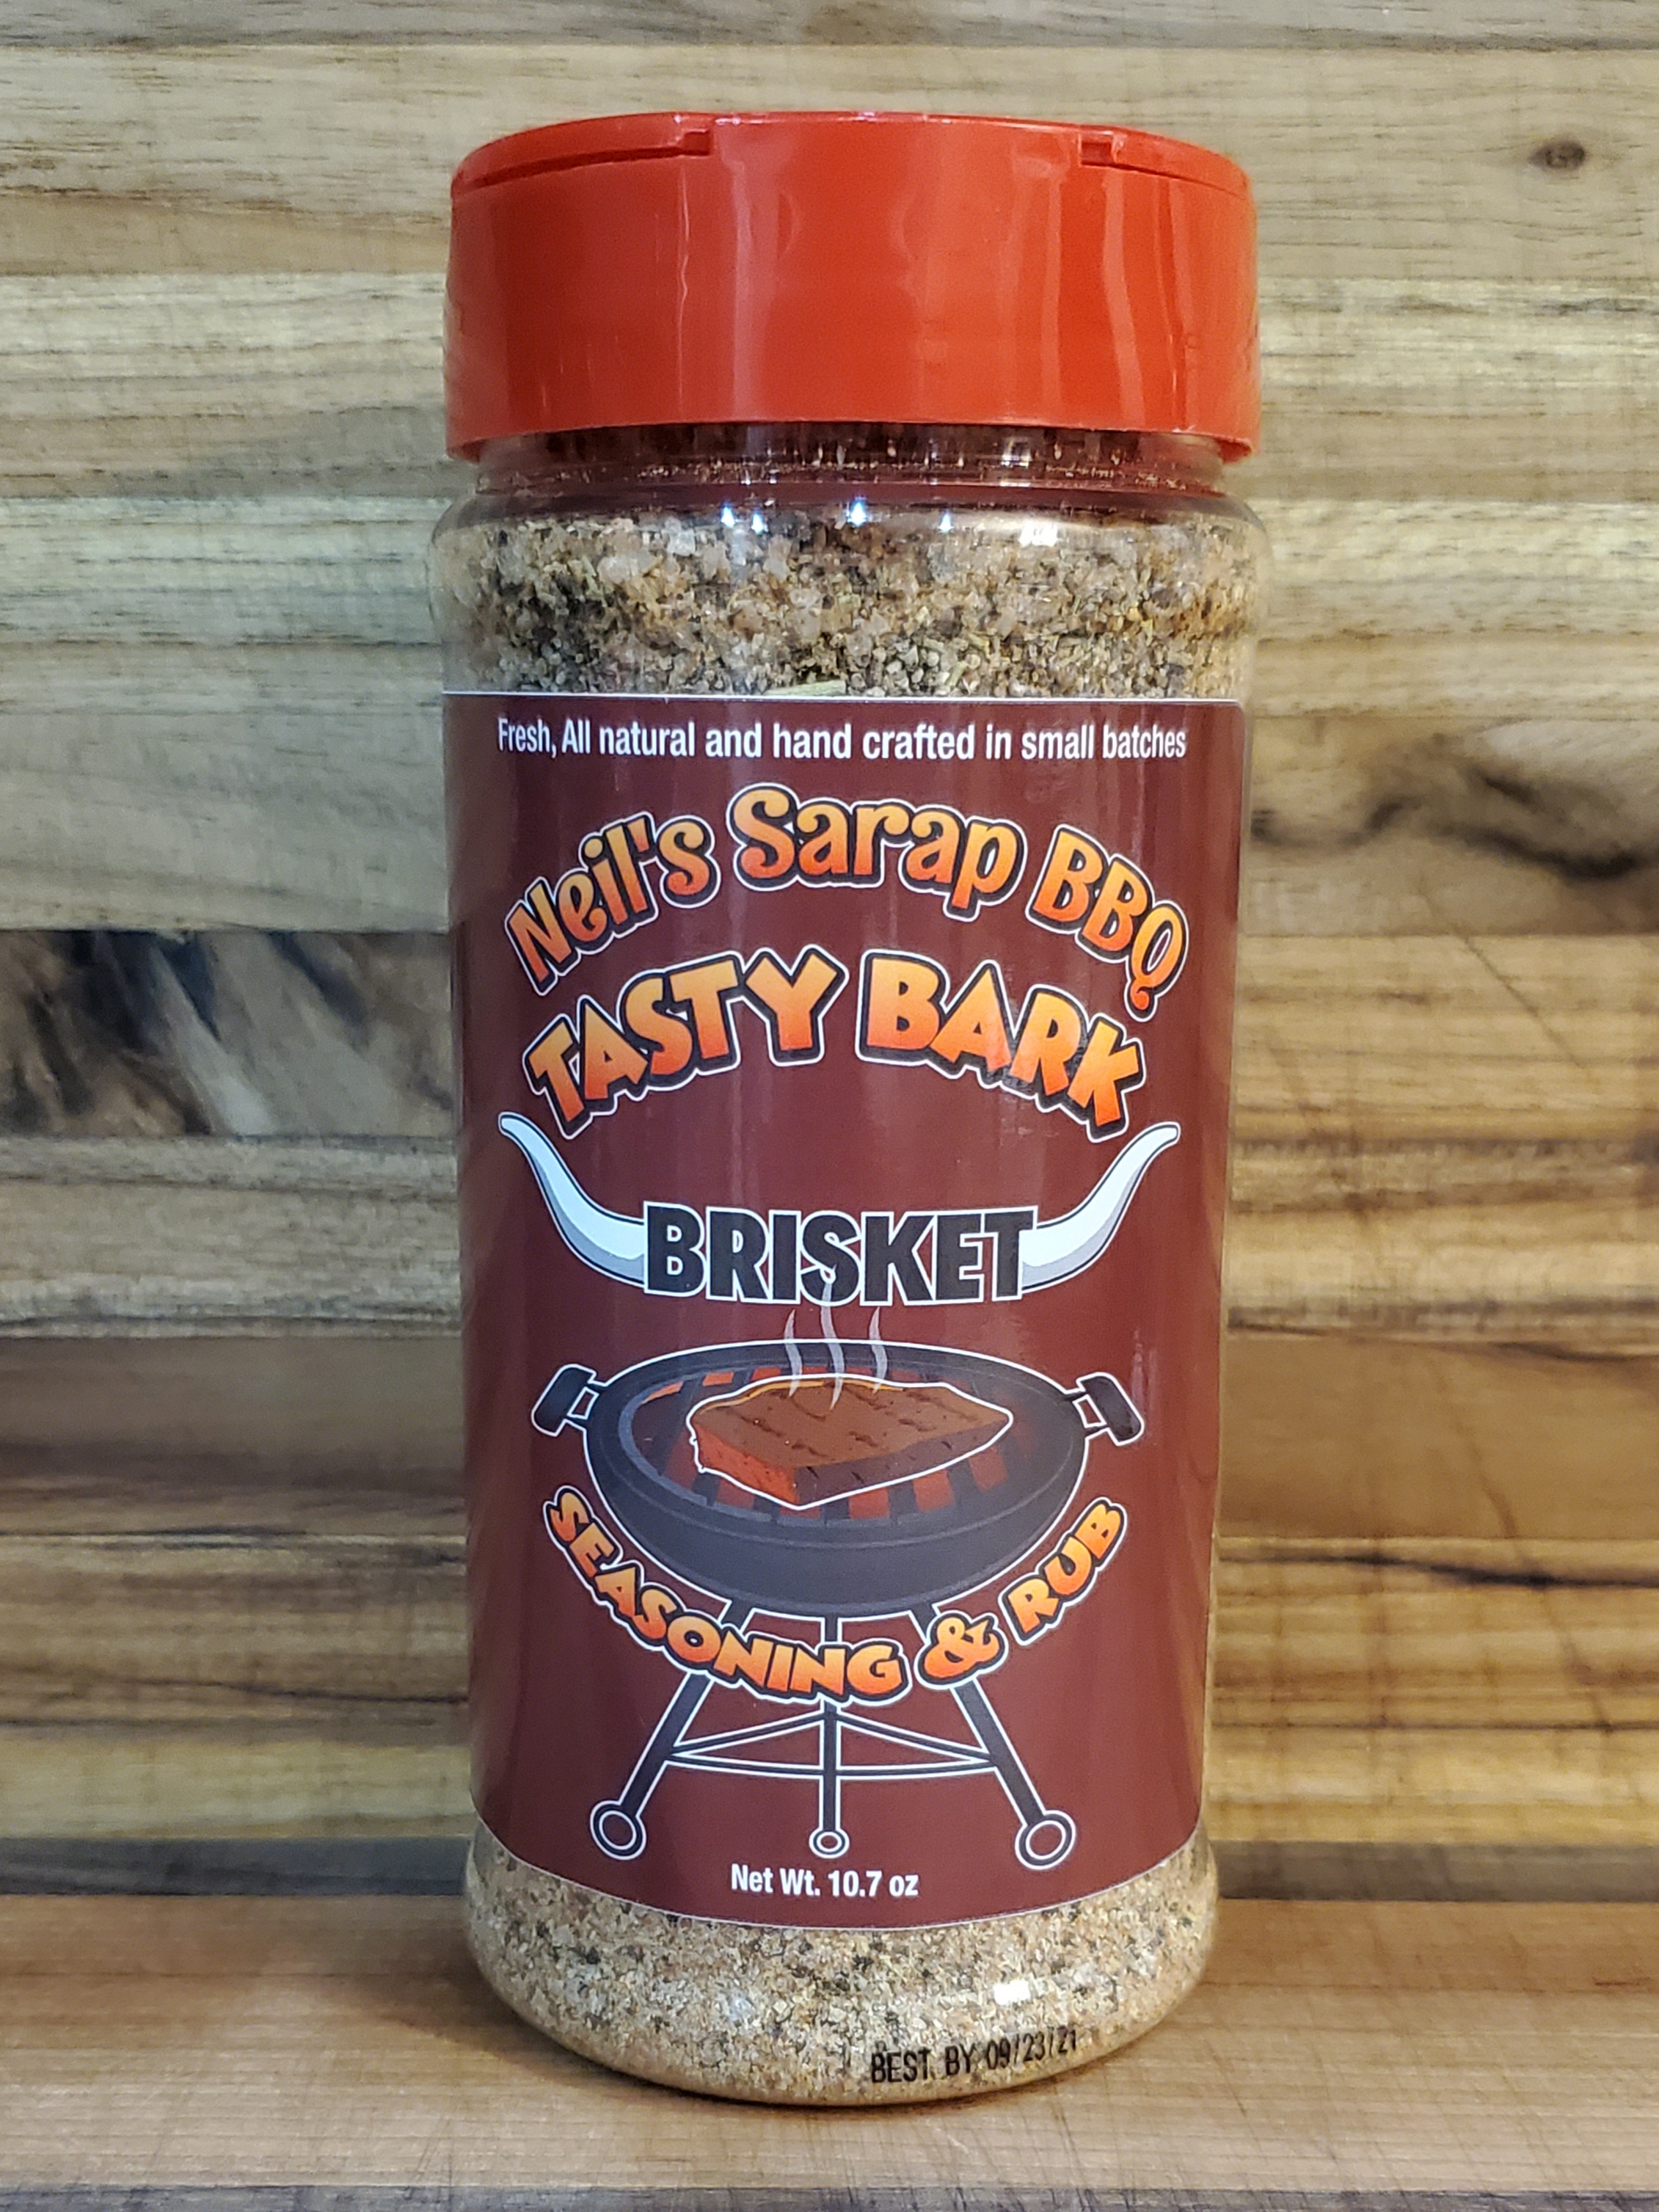 Tasty Bark Beef Brisket Seasoning & Rub 10.7oz – Neil's Sarap BBQ, LLC